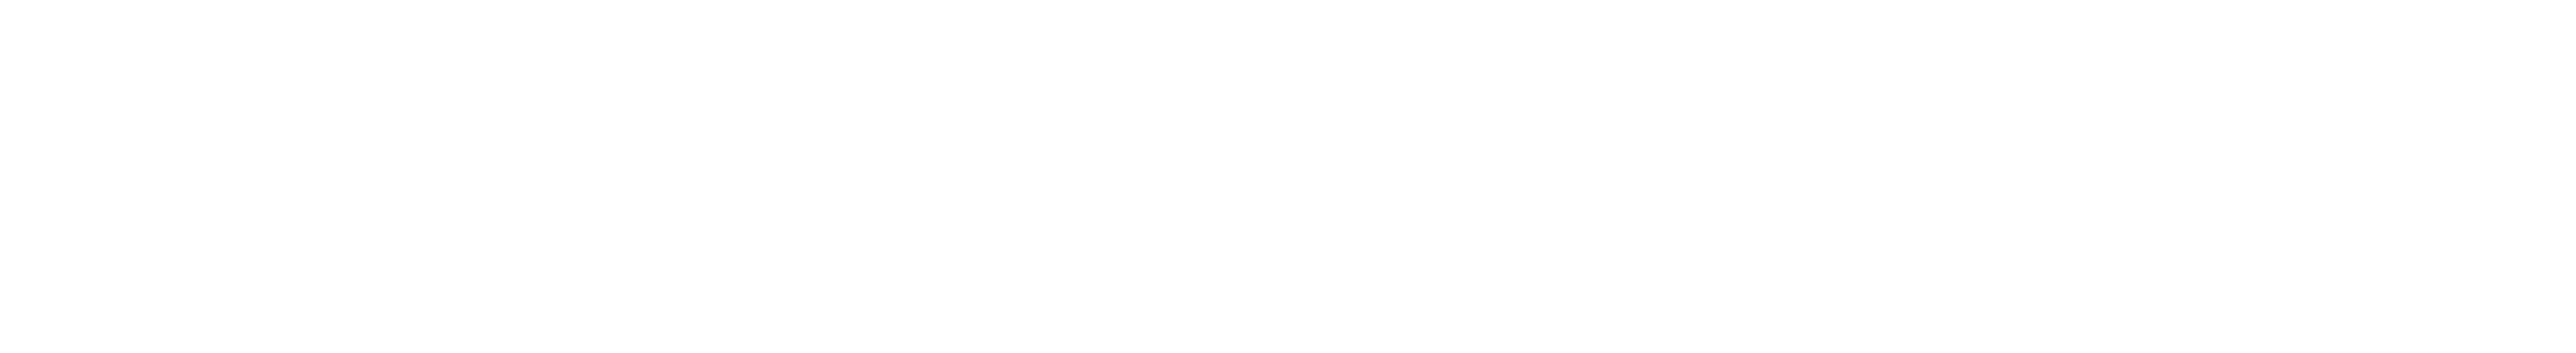 white-graphic-icon-treeline-silhouette